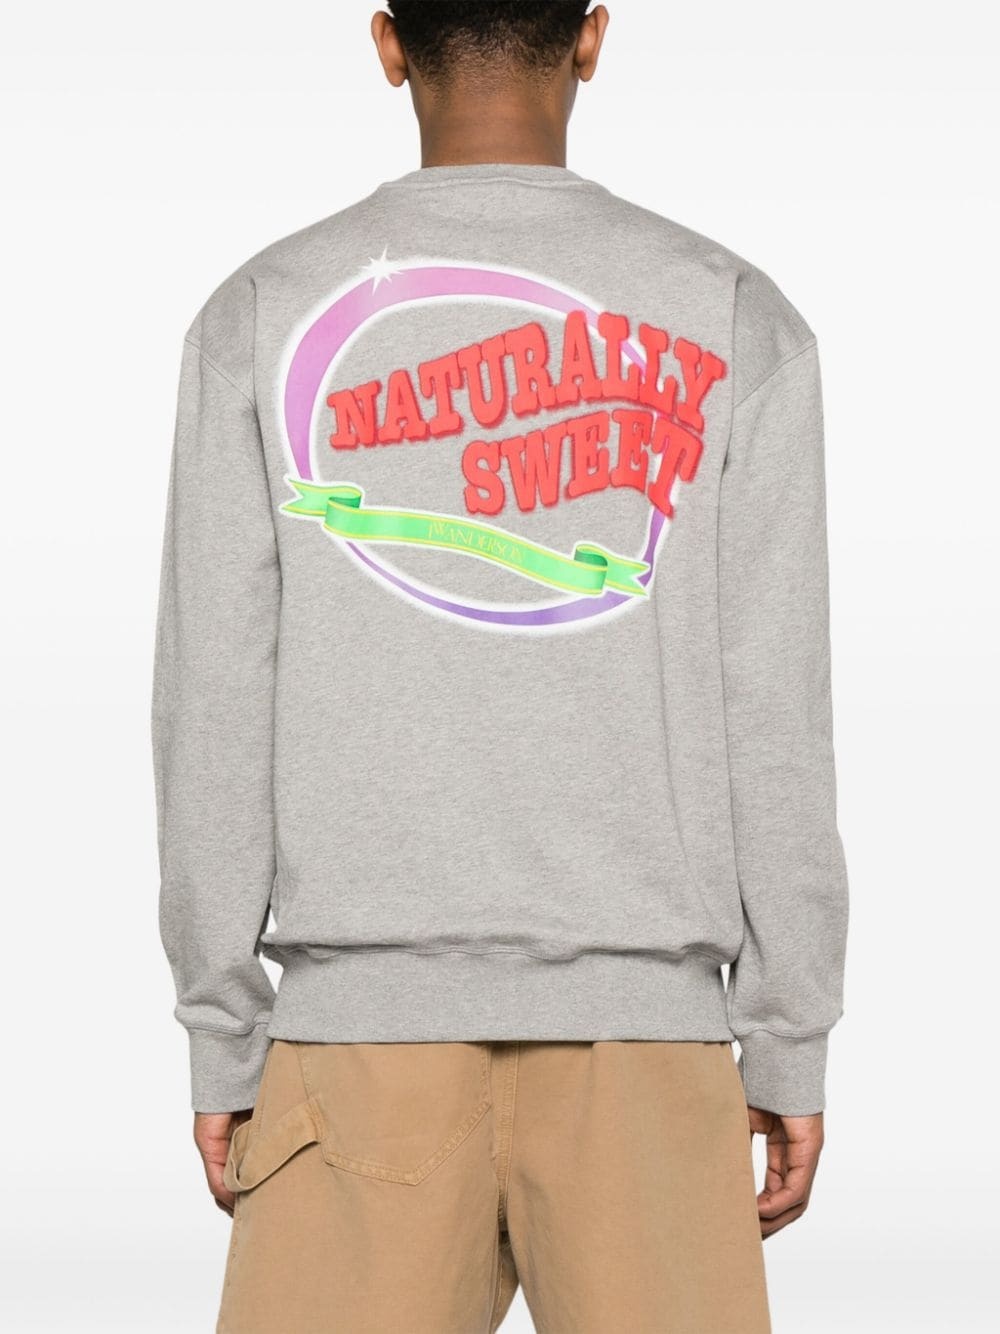 Naturally Sweet cotton sweatshirt - 4